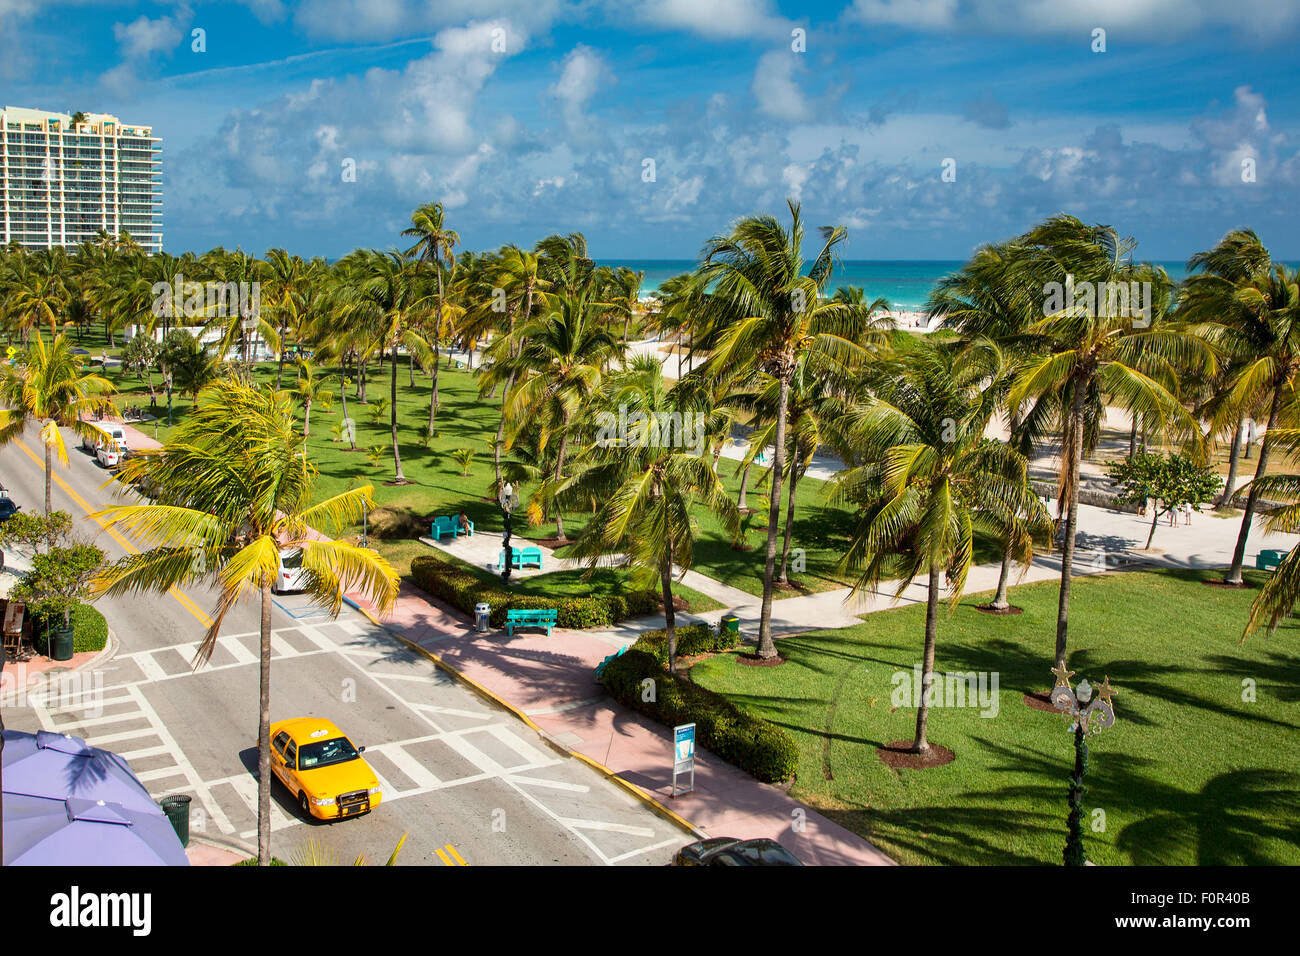 Miami, South Beach, Verkehr am Ocean Drive Stockfoto